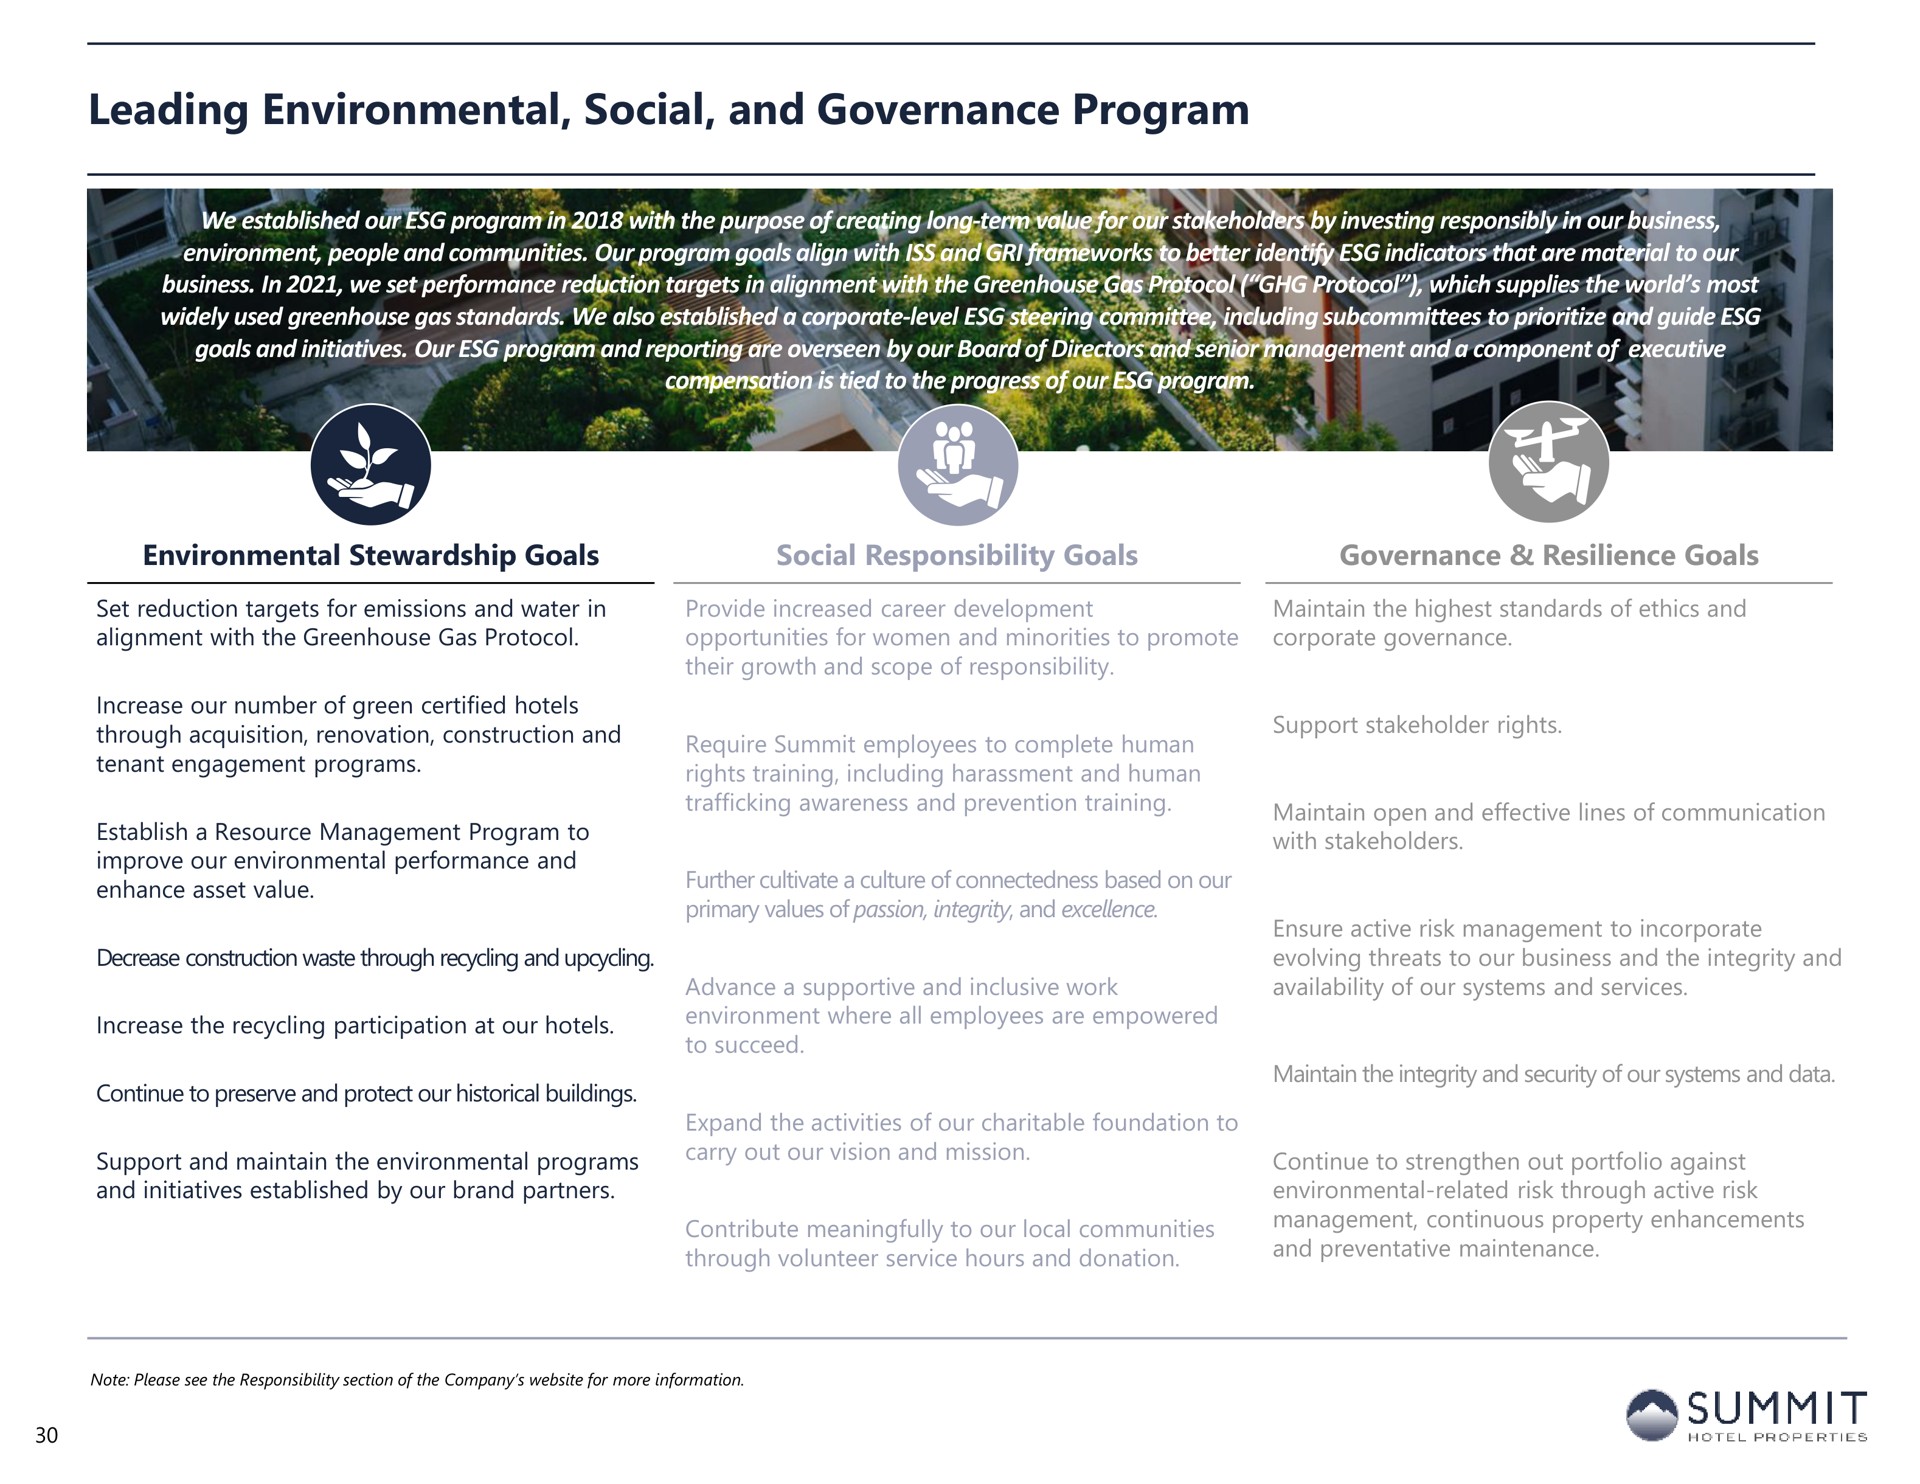 leading environmental social and governance program summit | Summit Hotel Properties